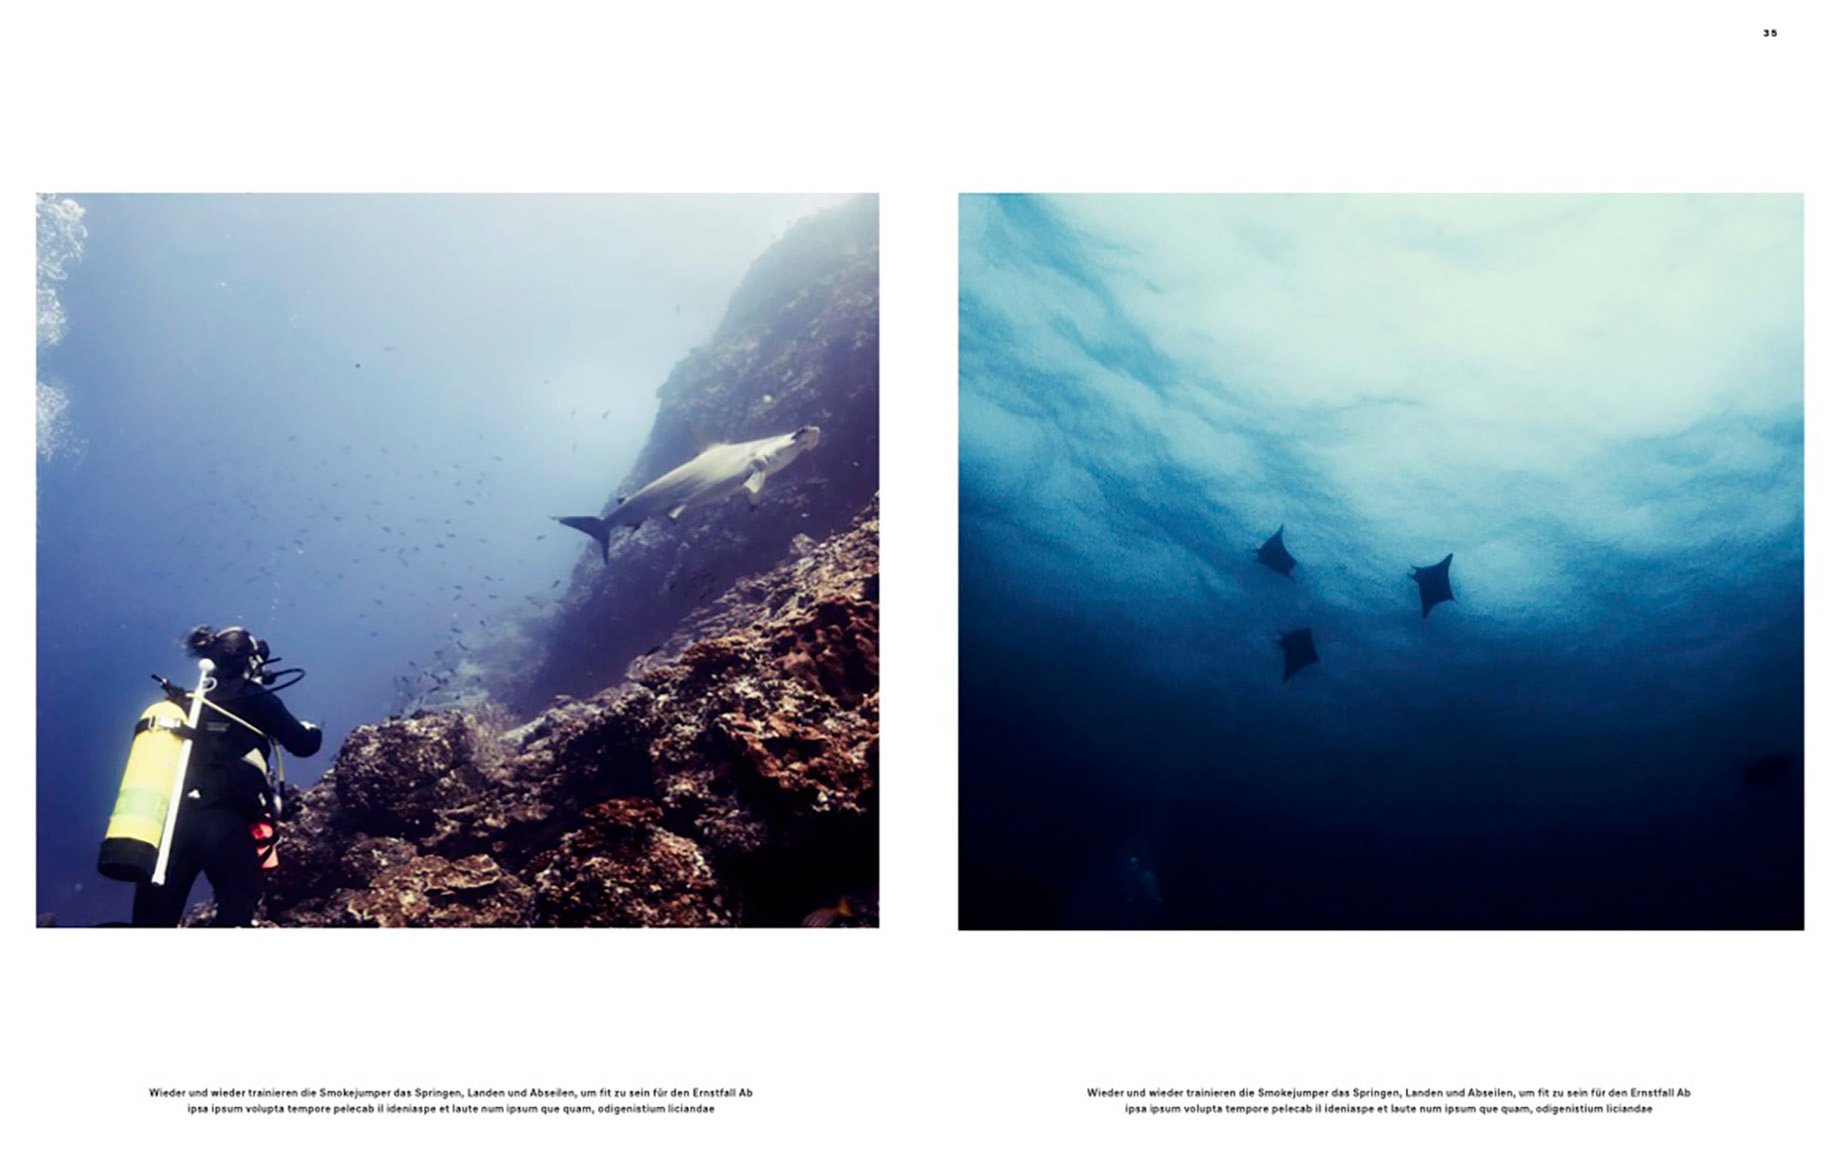 Tearsheet of Cocos Island shot by Julian Walter for Lufthansa magazine